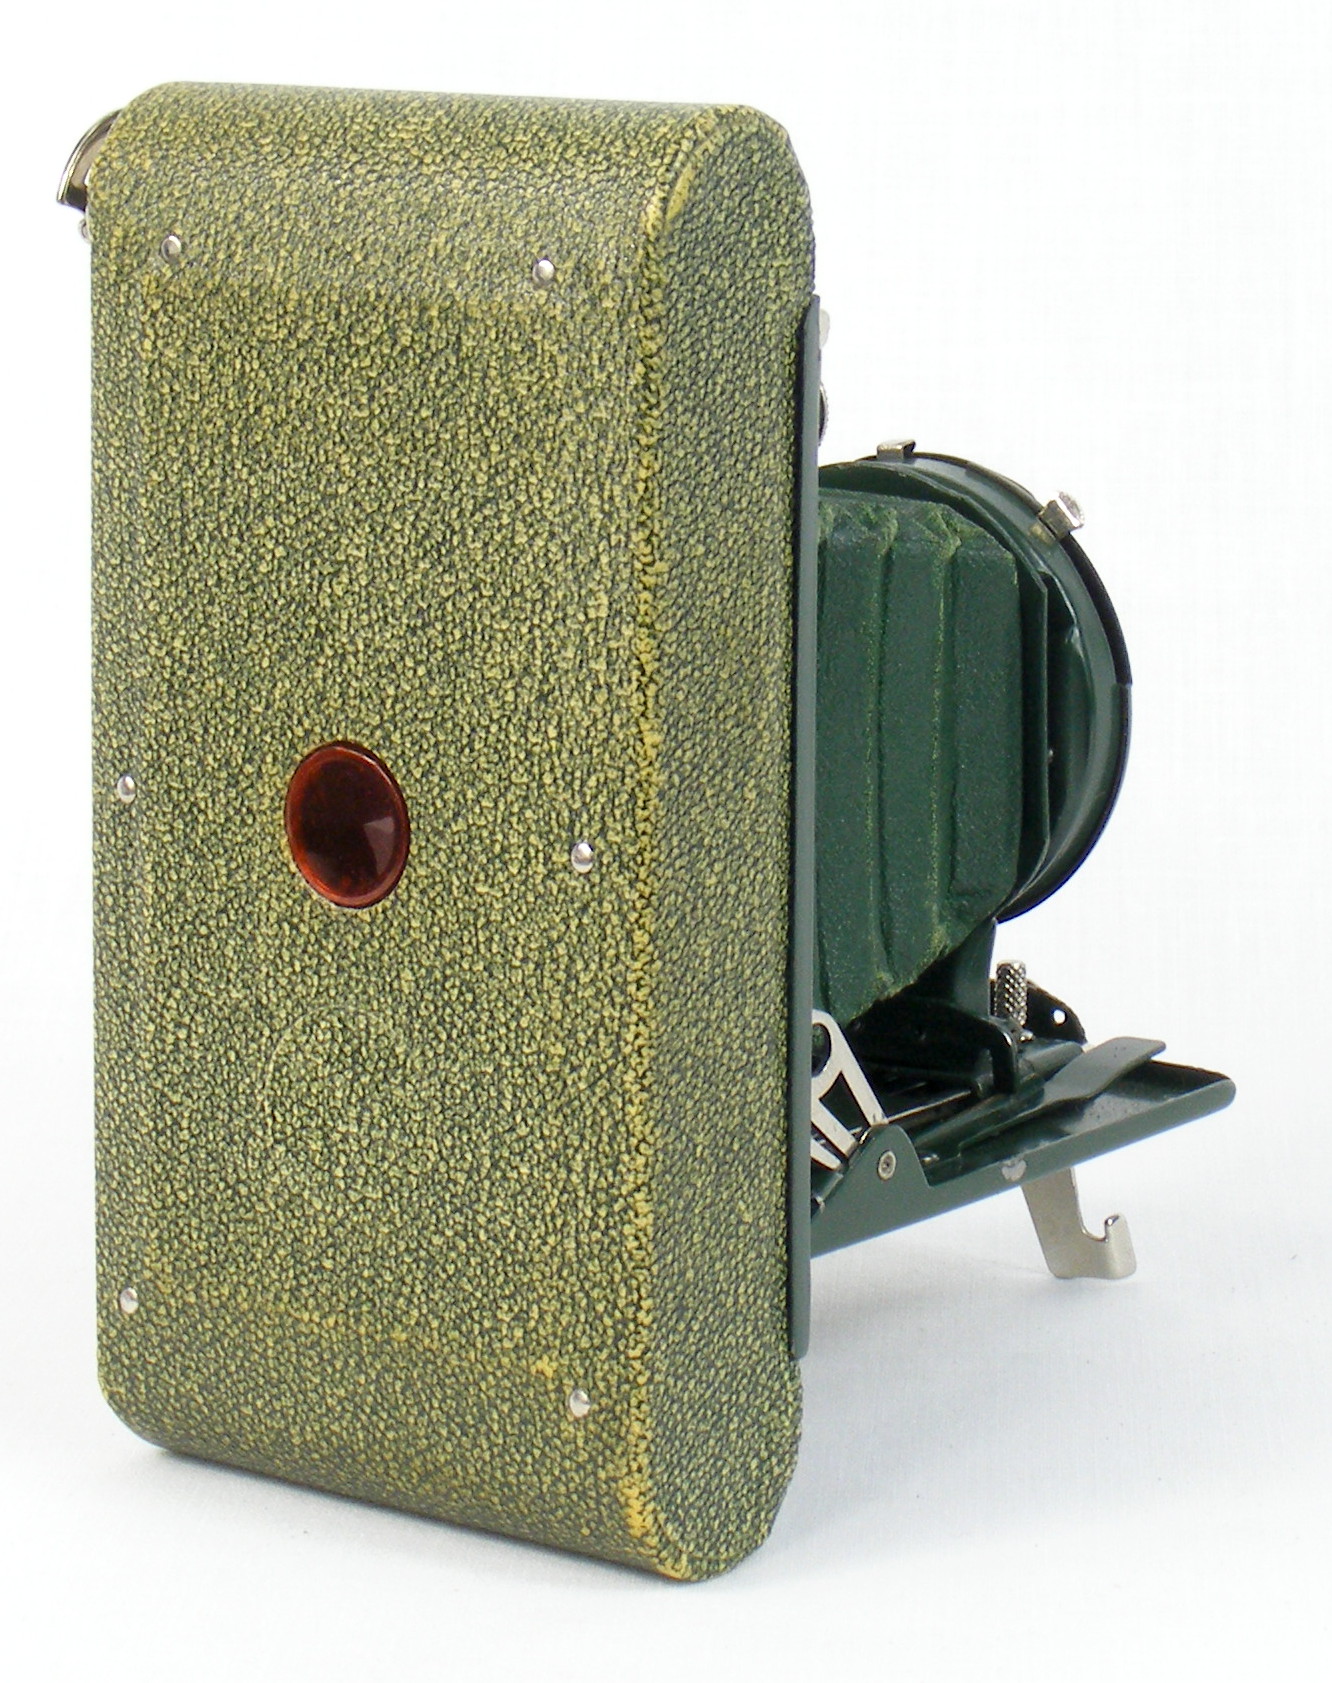 Rear view of Girl Scout Kodak camera